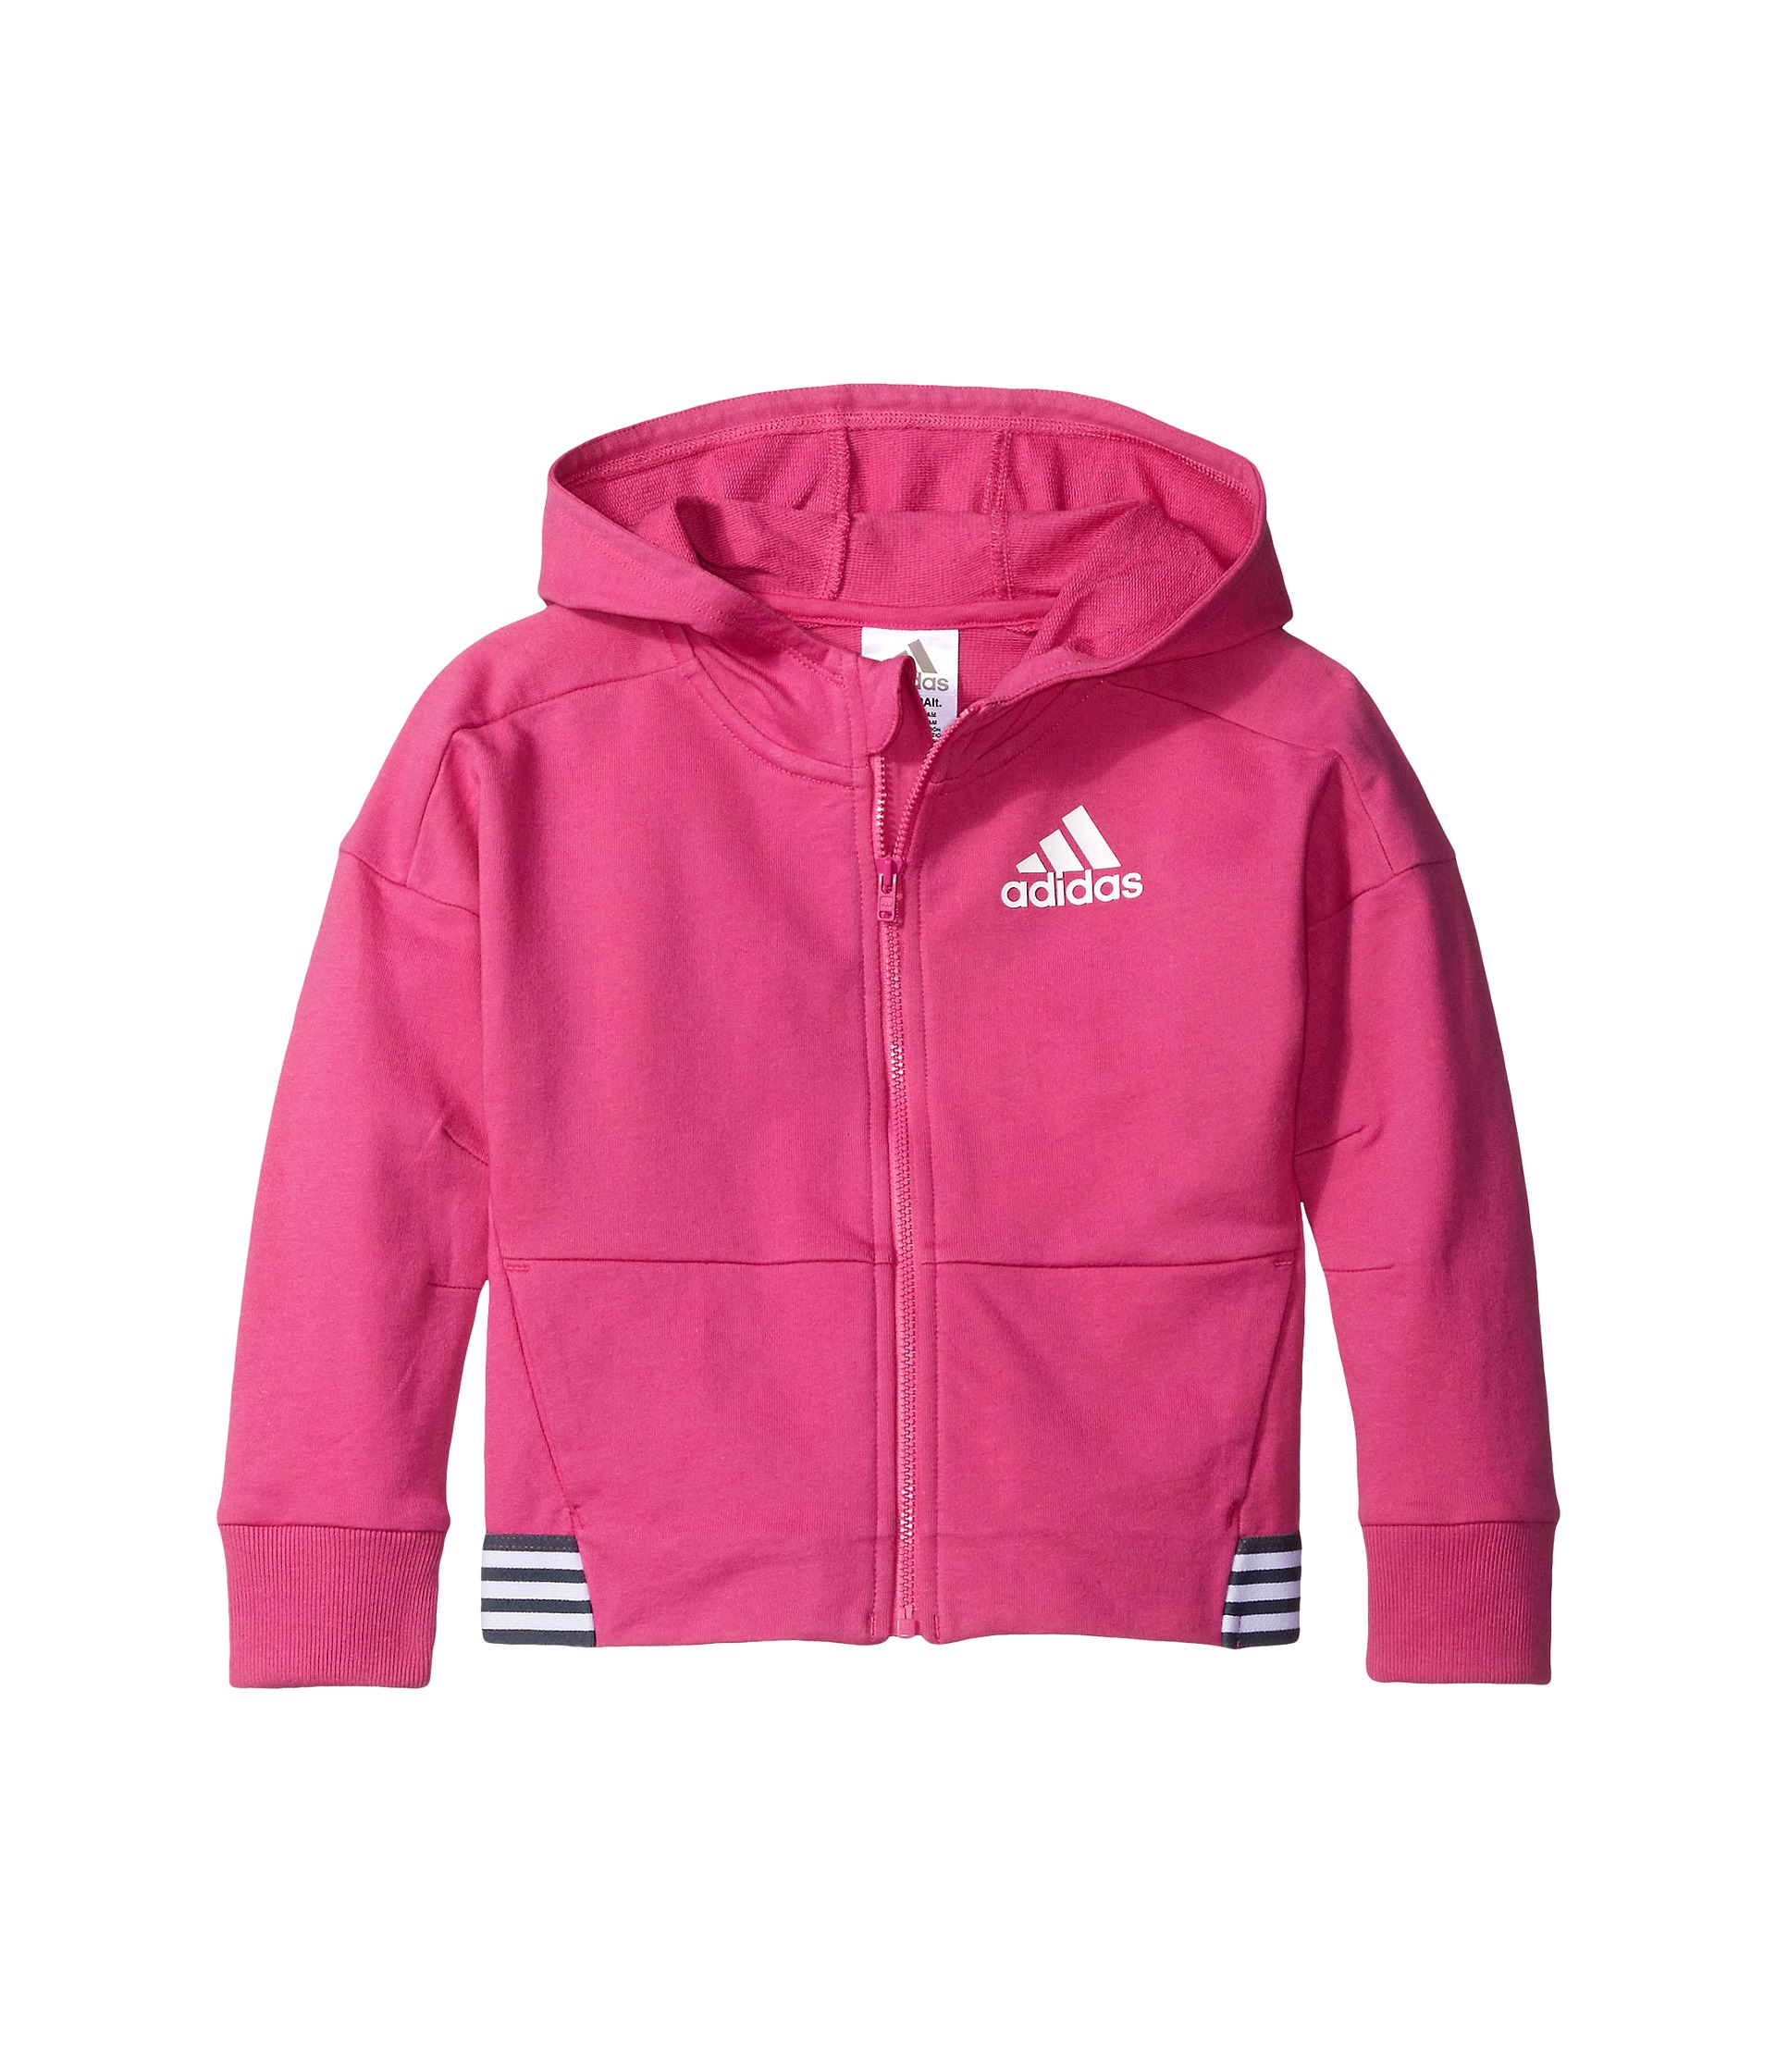 adidas Kids Agility Jacket (Big Kids) Medium Pink - Zappos.com Free ...